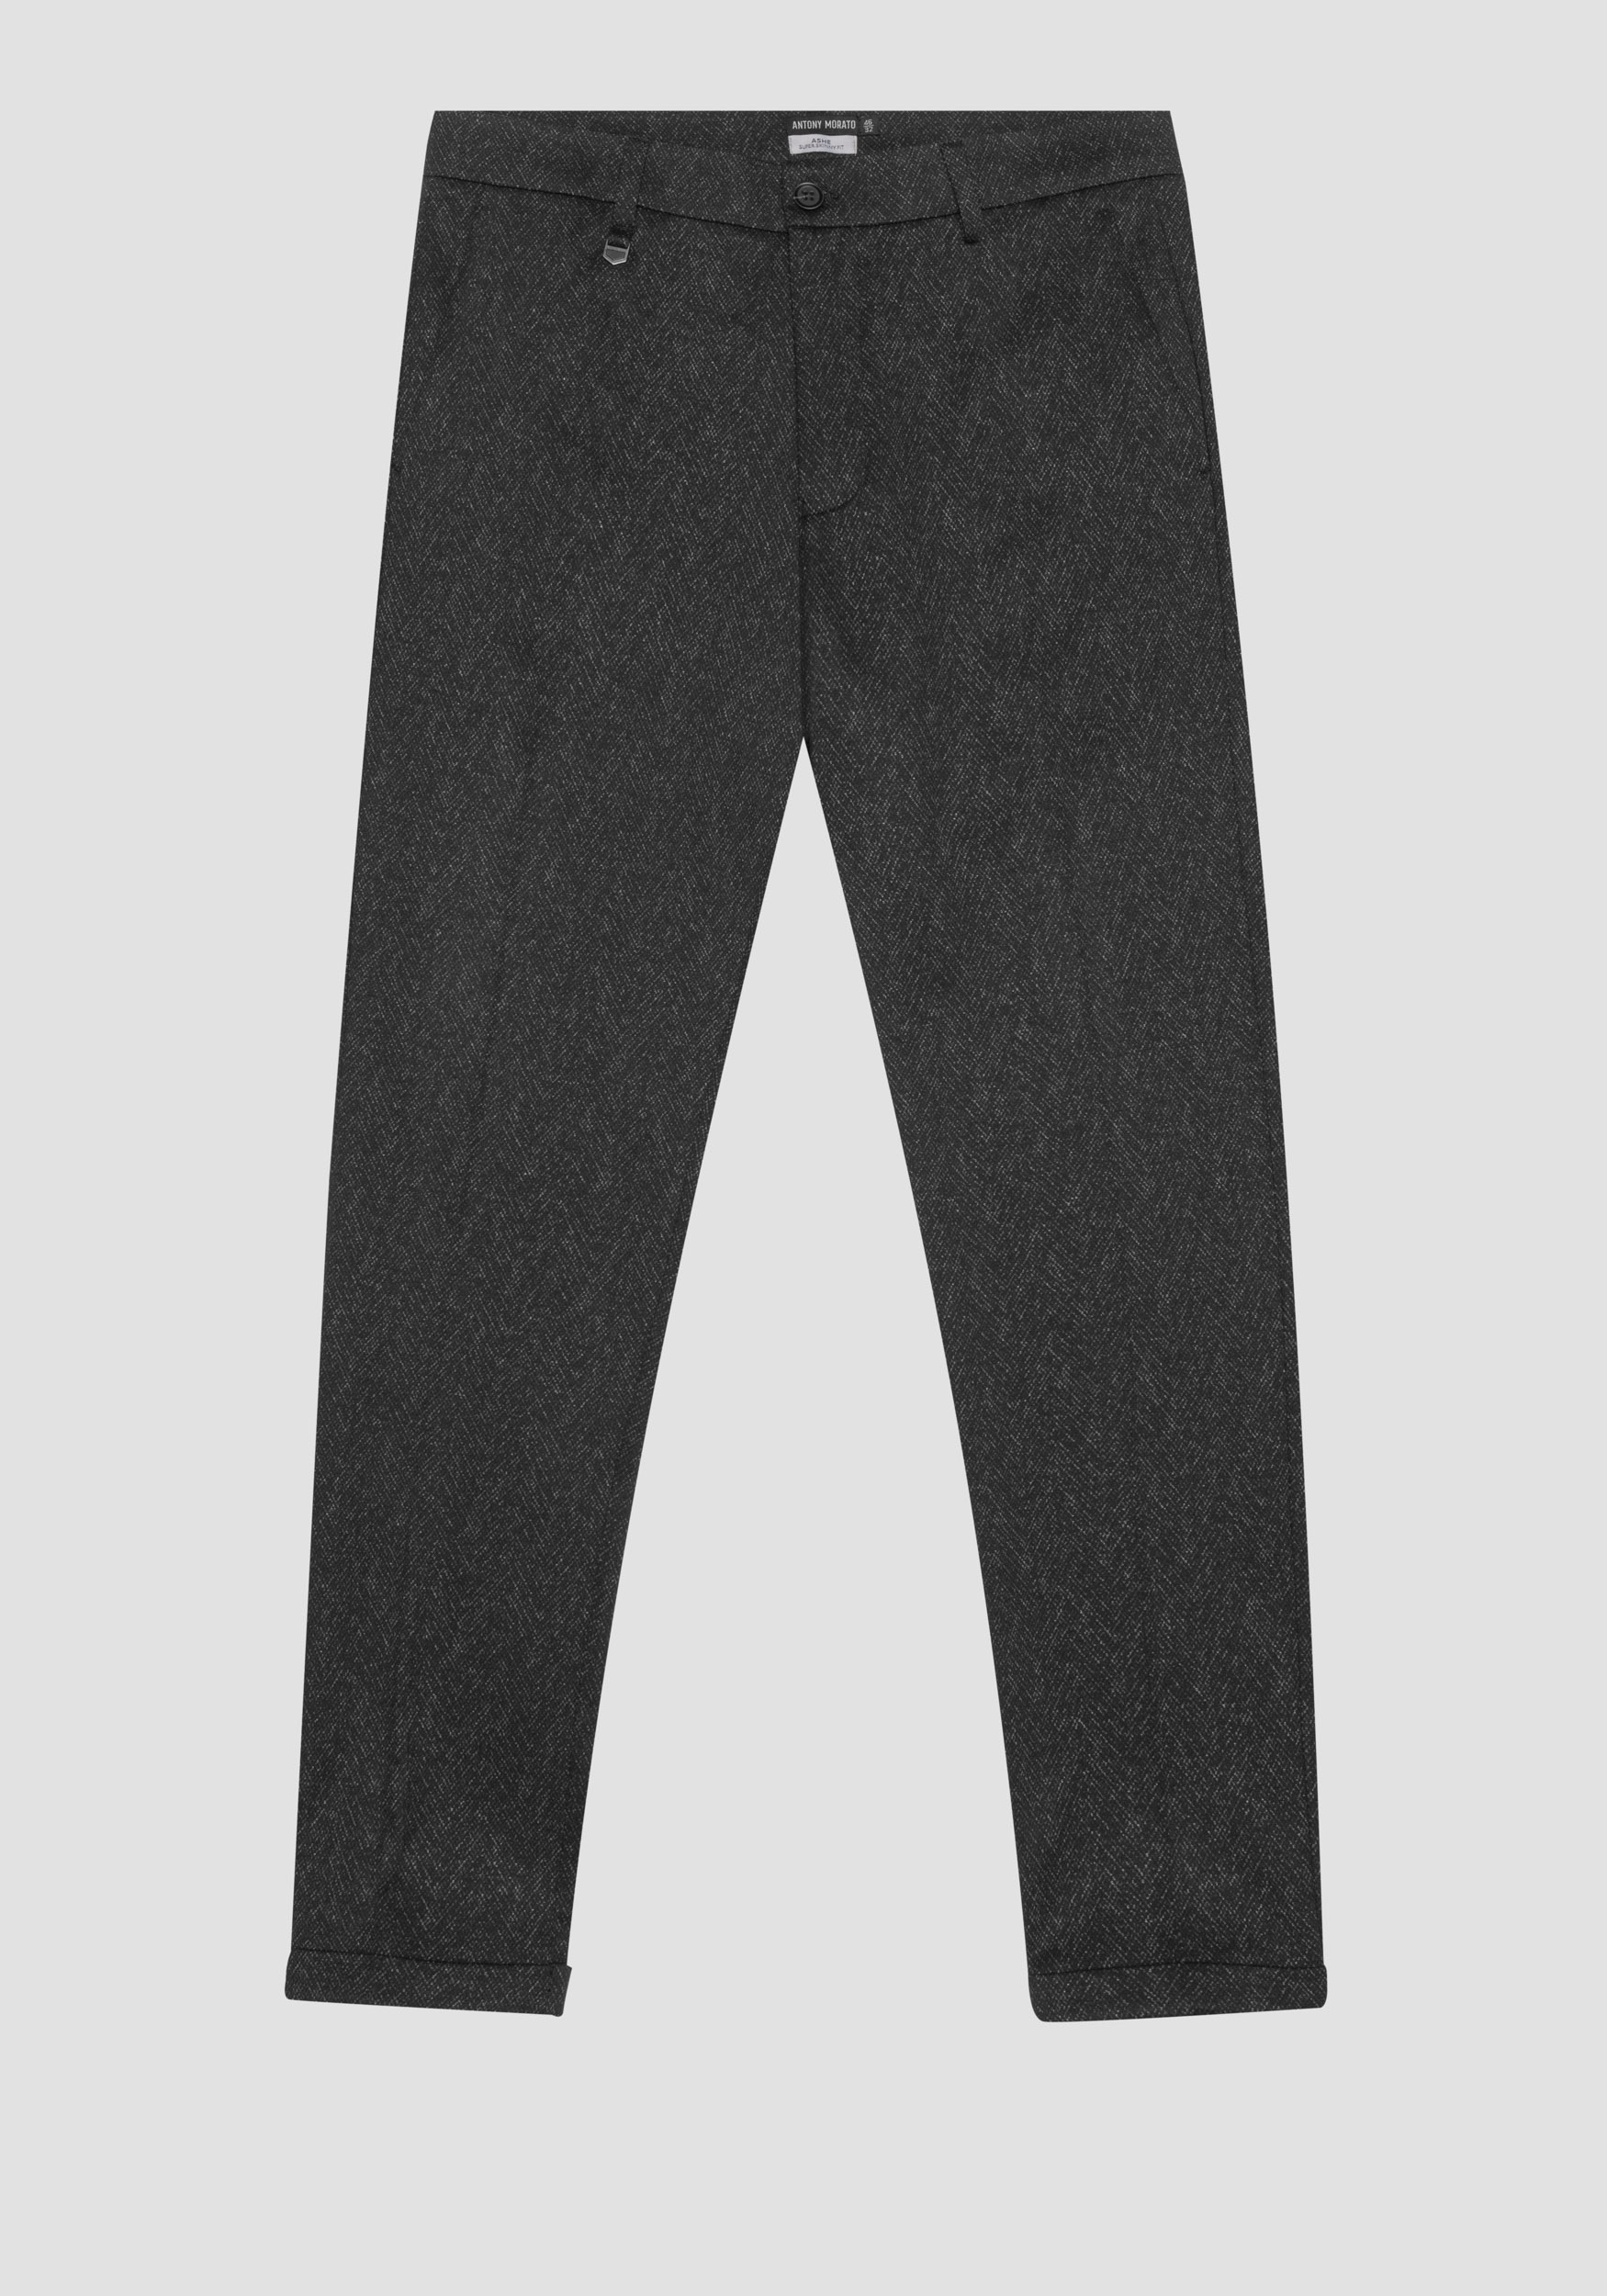 Antony Morato Pantalon Super Skinny Fit Ashe En Tissu De Viscose Melangee Stretch Avec Motif A Chevrons Noir | Homme Pantalons